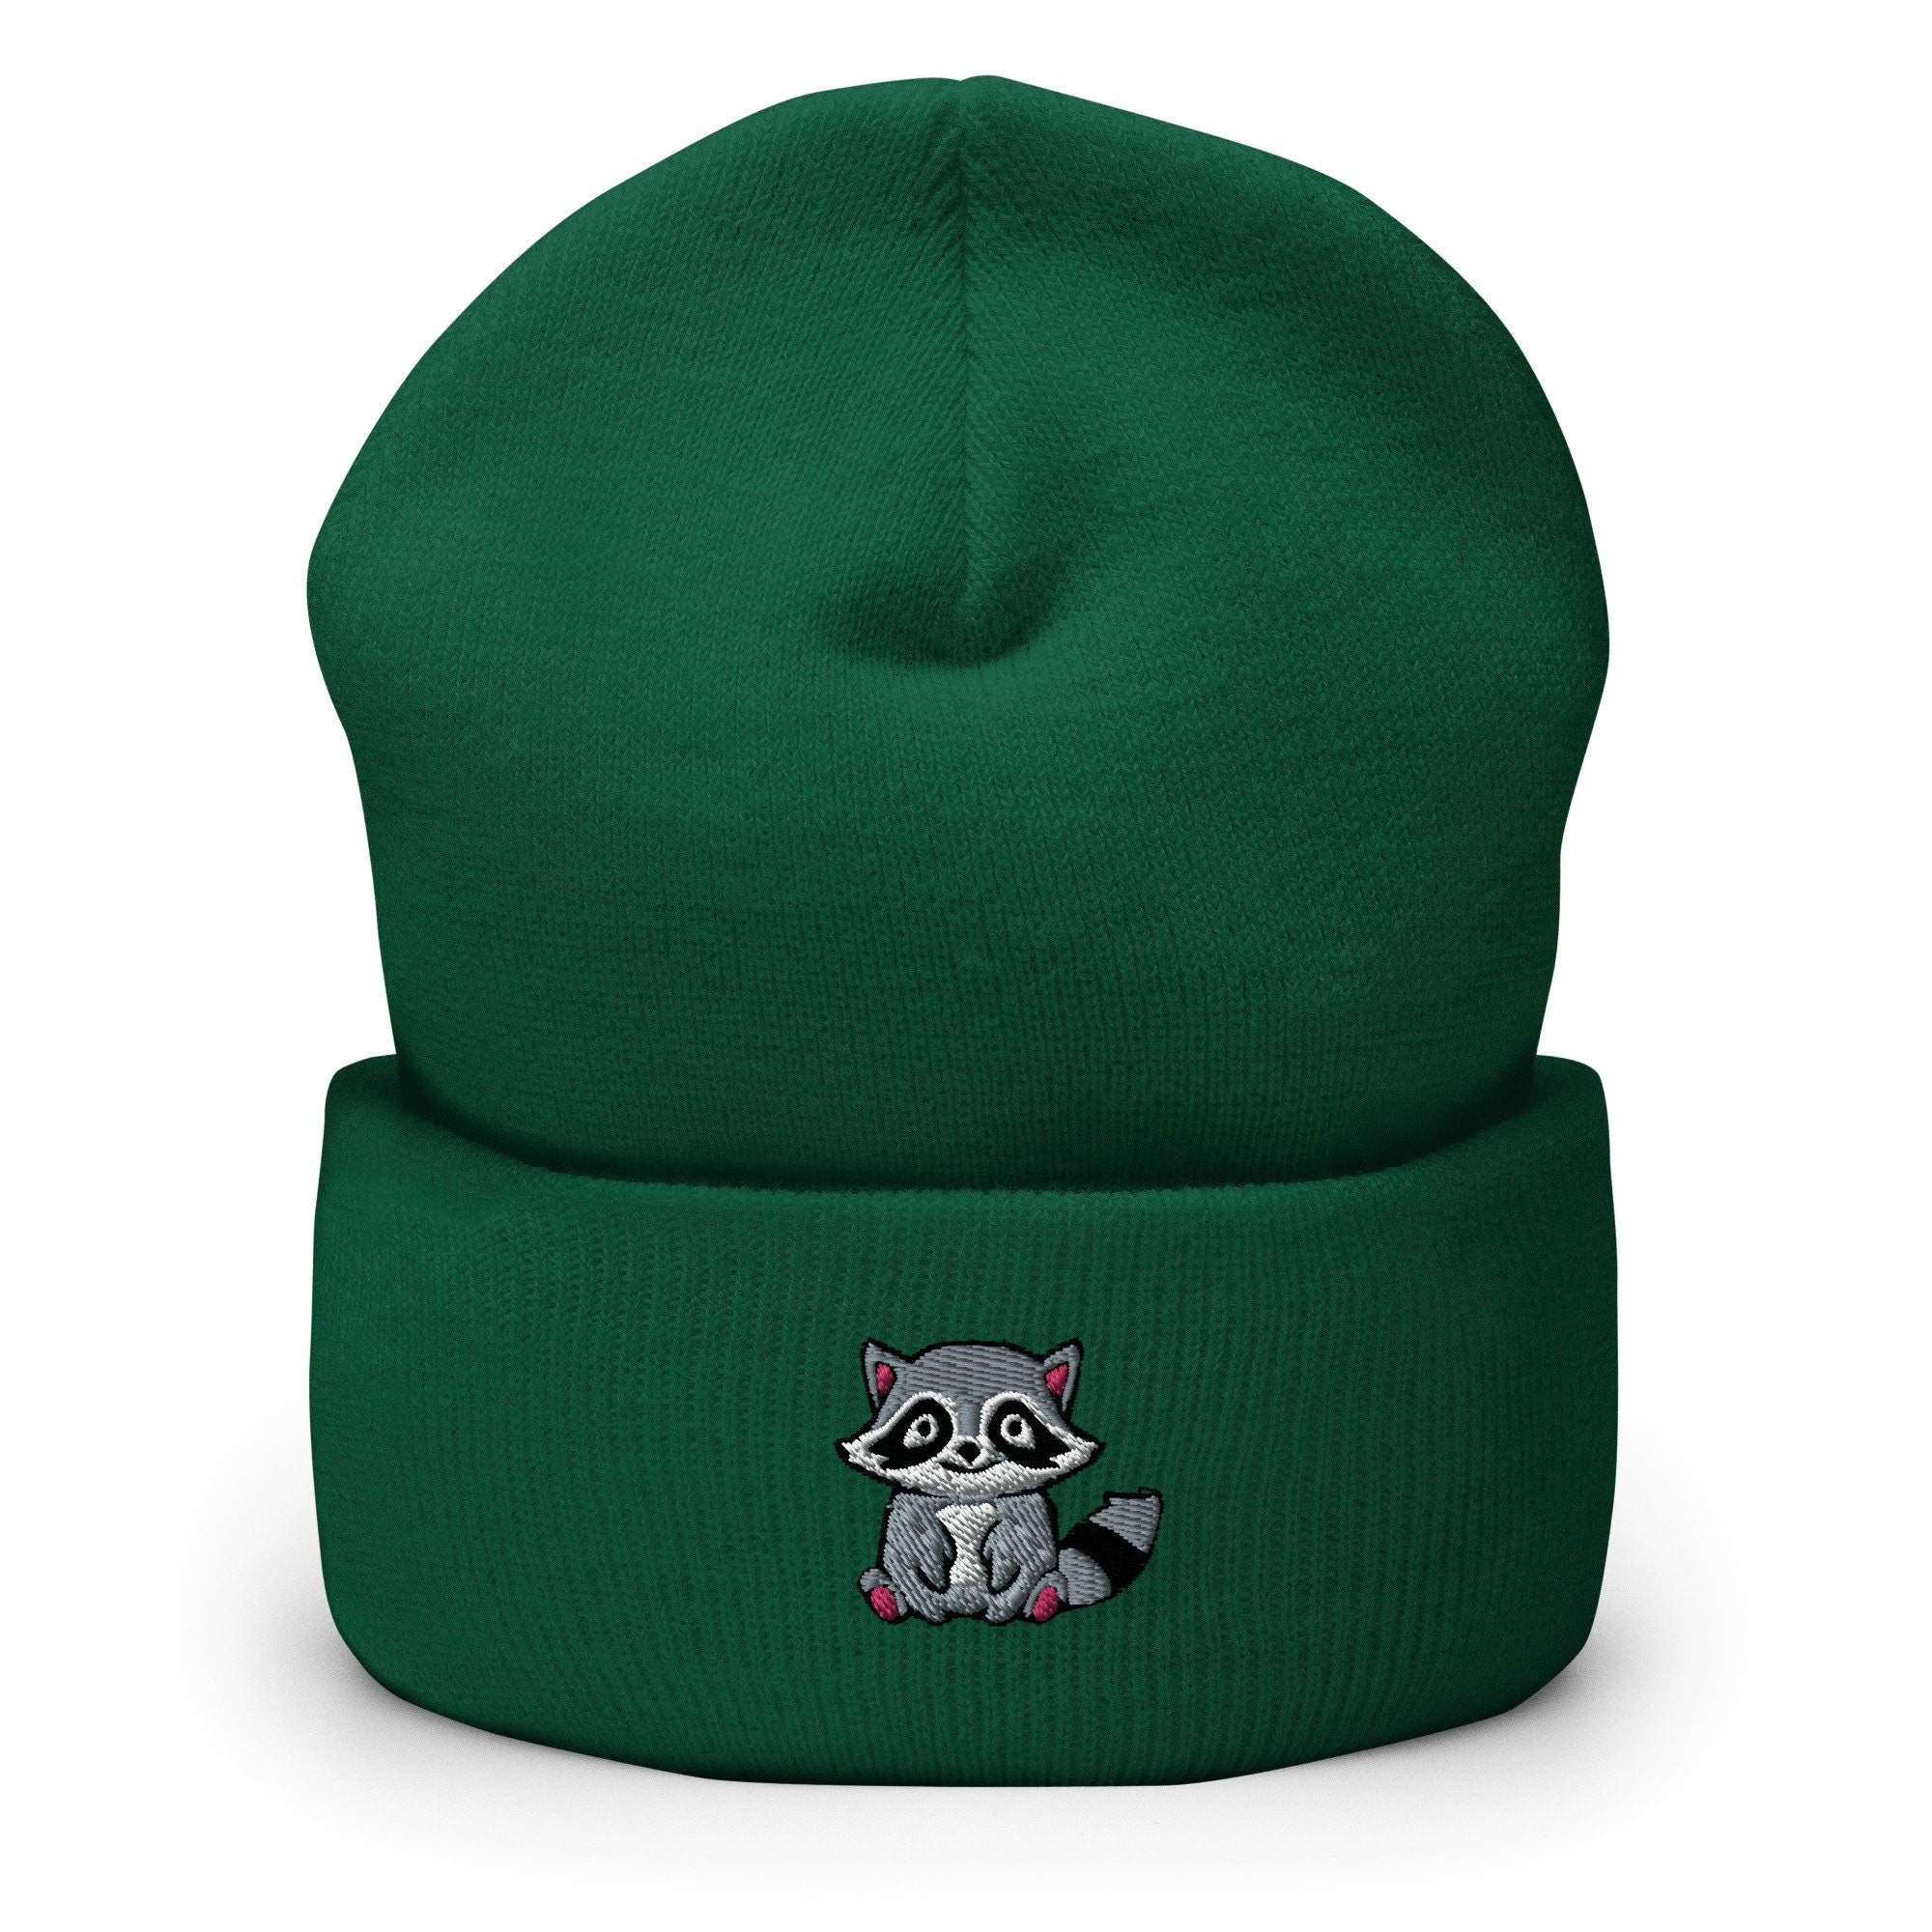 Trash Panda Raccoon Embroidered Beanie, Handmade Cuffed Knit Unisex Slouchy Adult Winter Hat Cap Gift